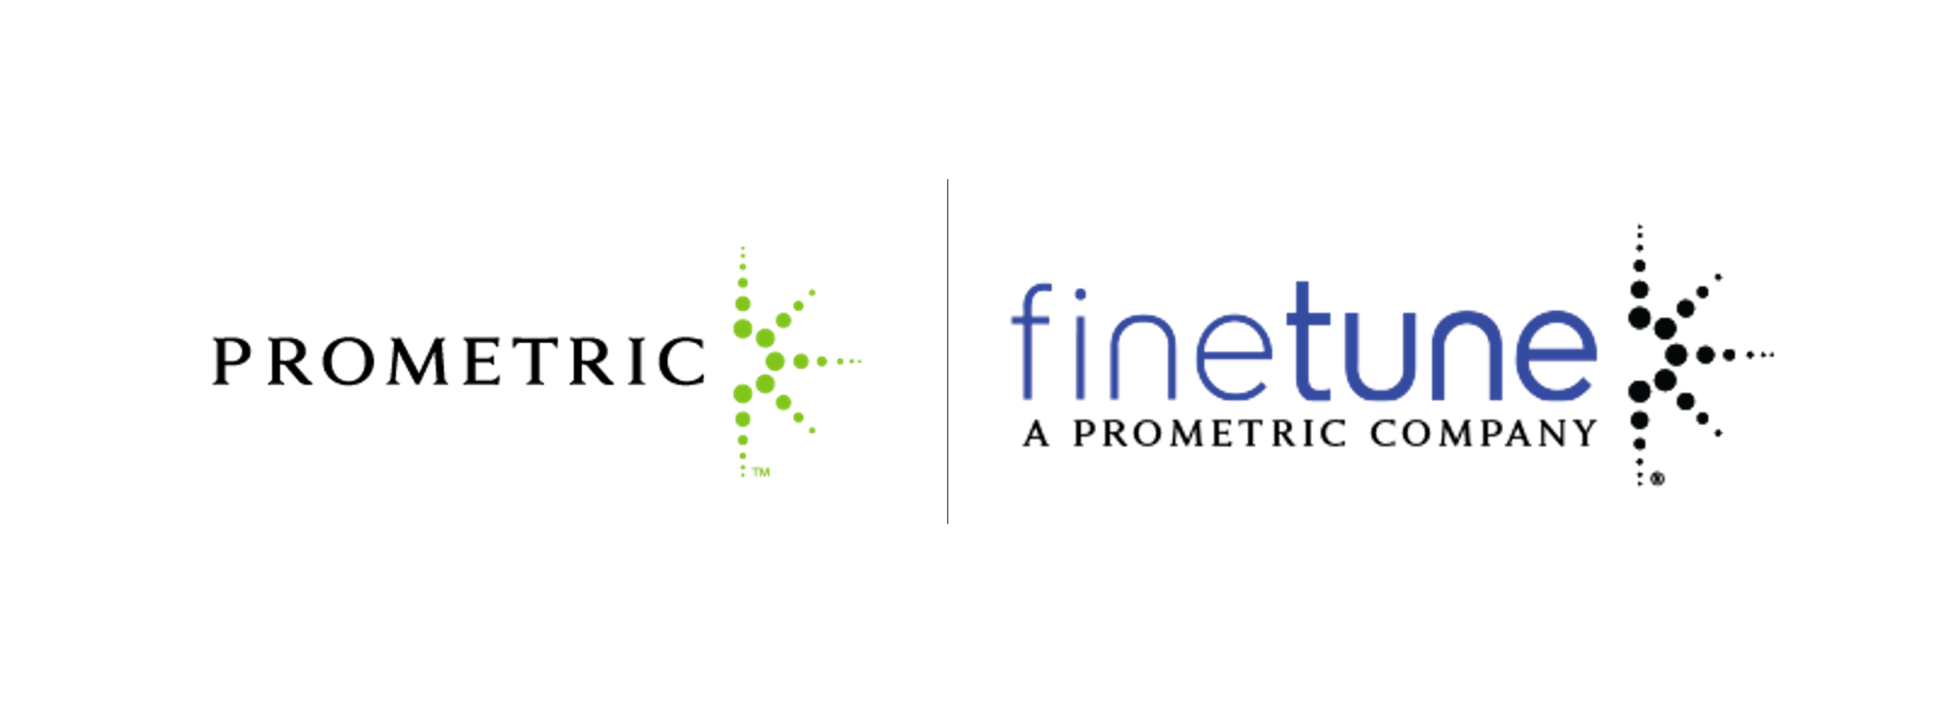 Prometric+Finetune logo